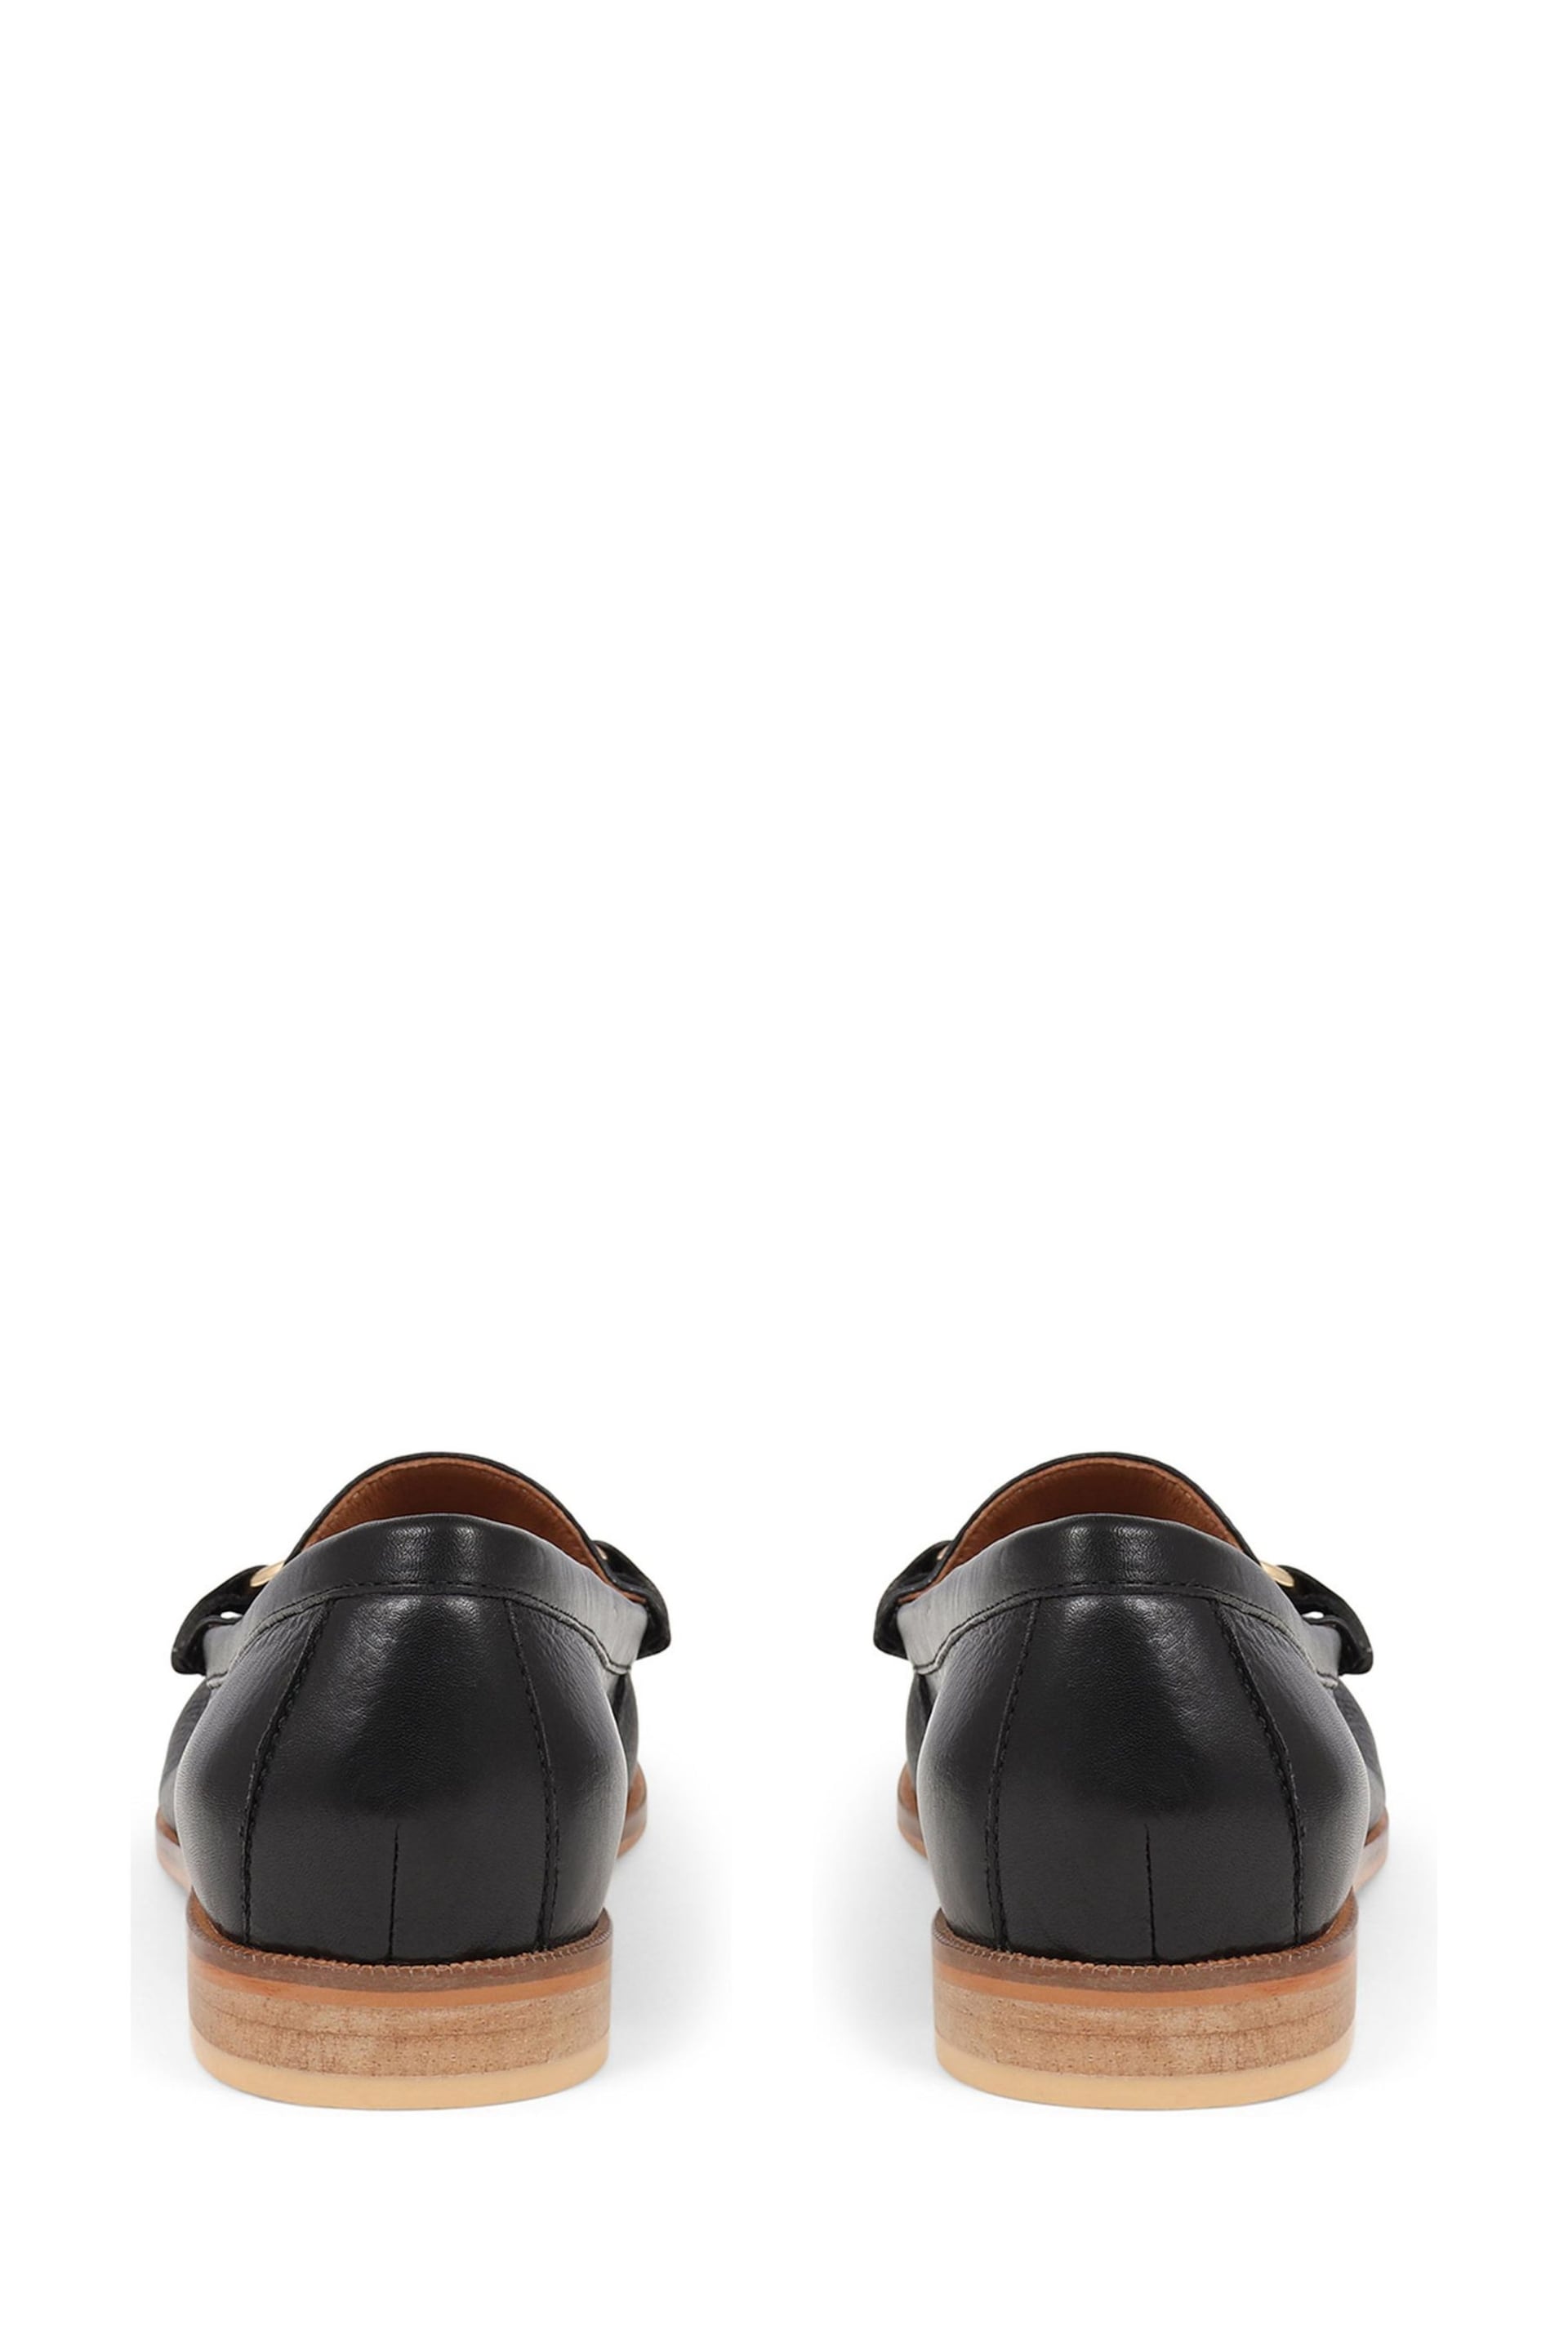 Jones Bootmaker Tadley Leather Cream Loafers - Image 6 of 8